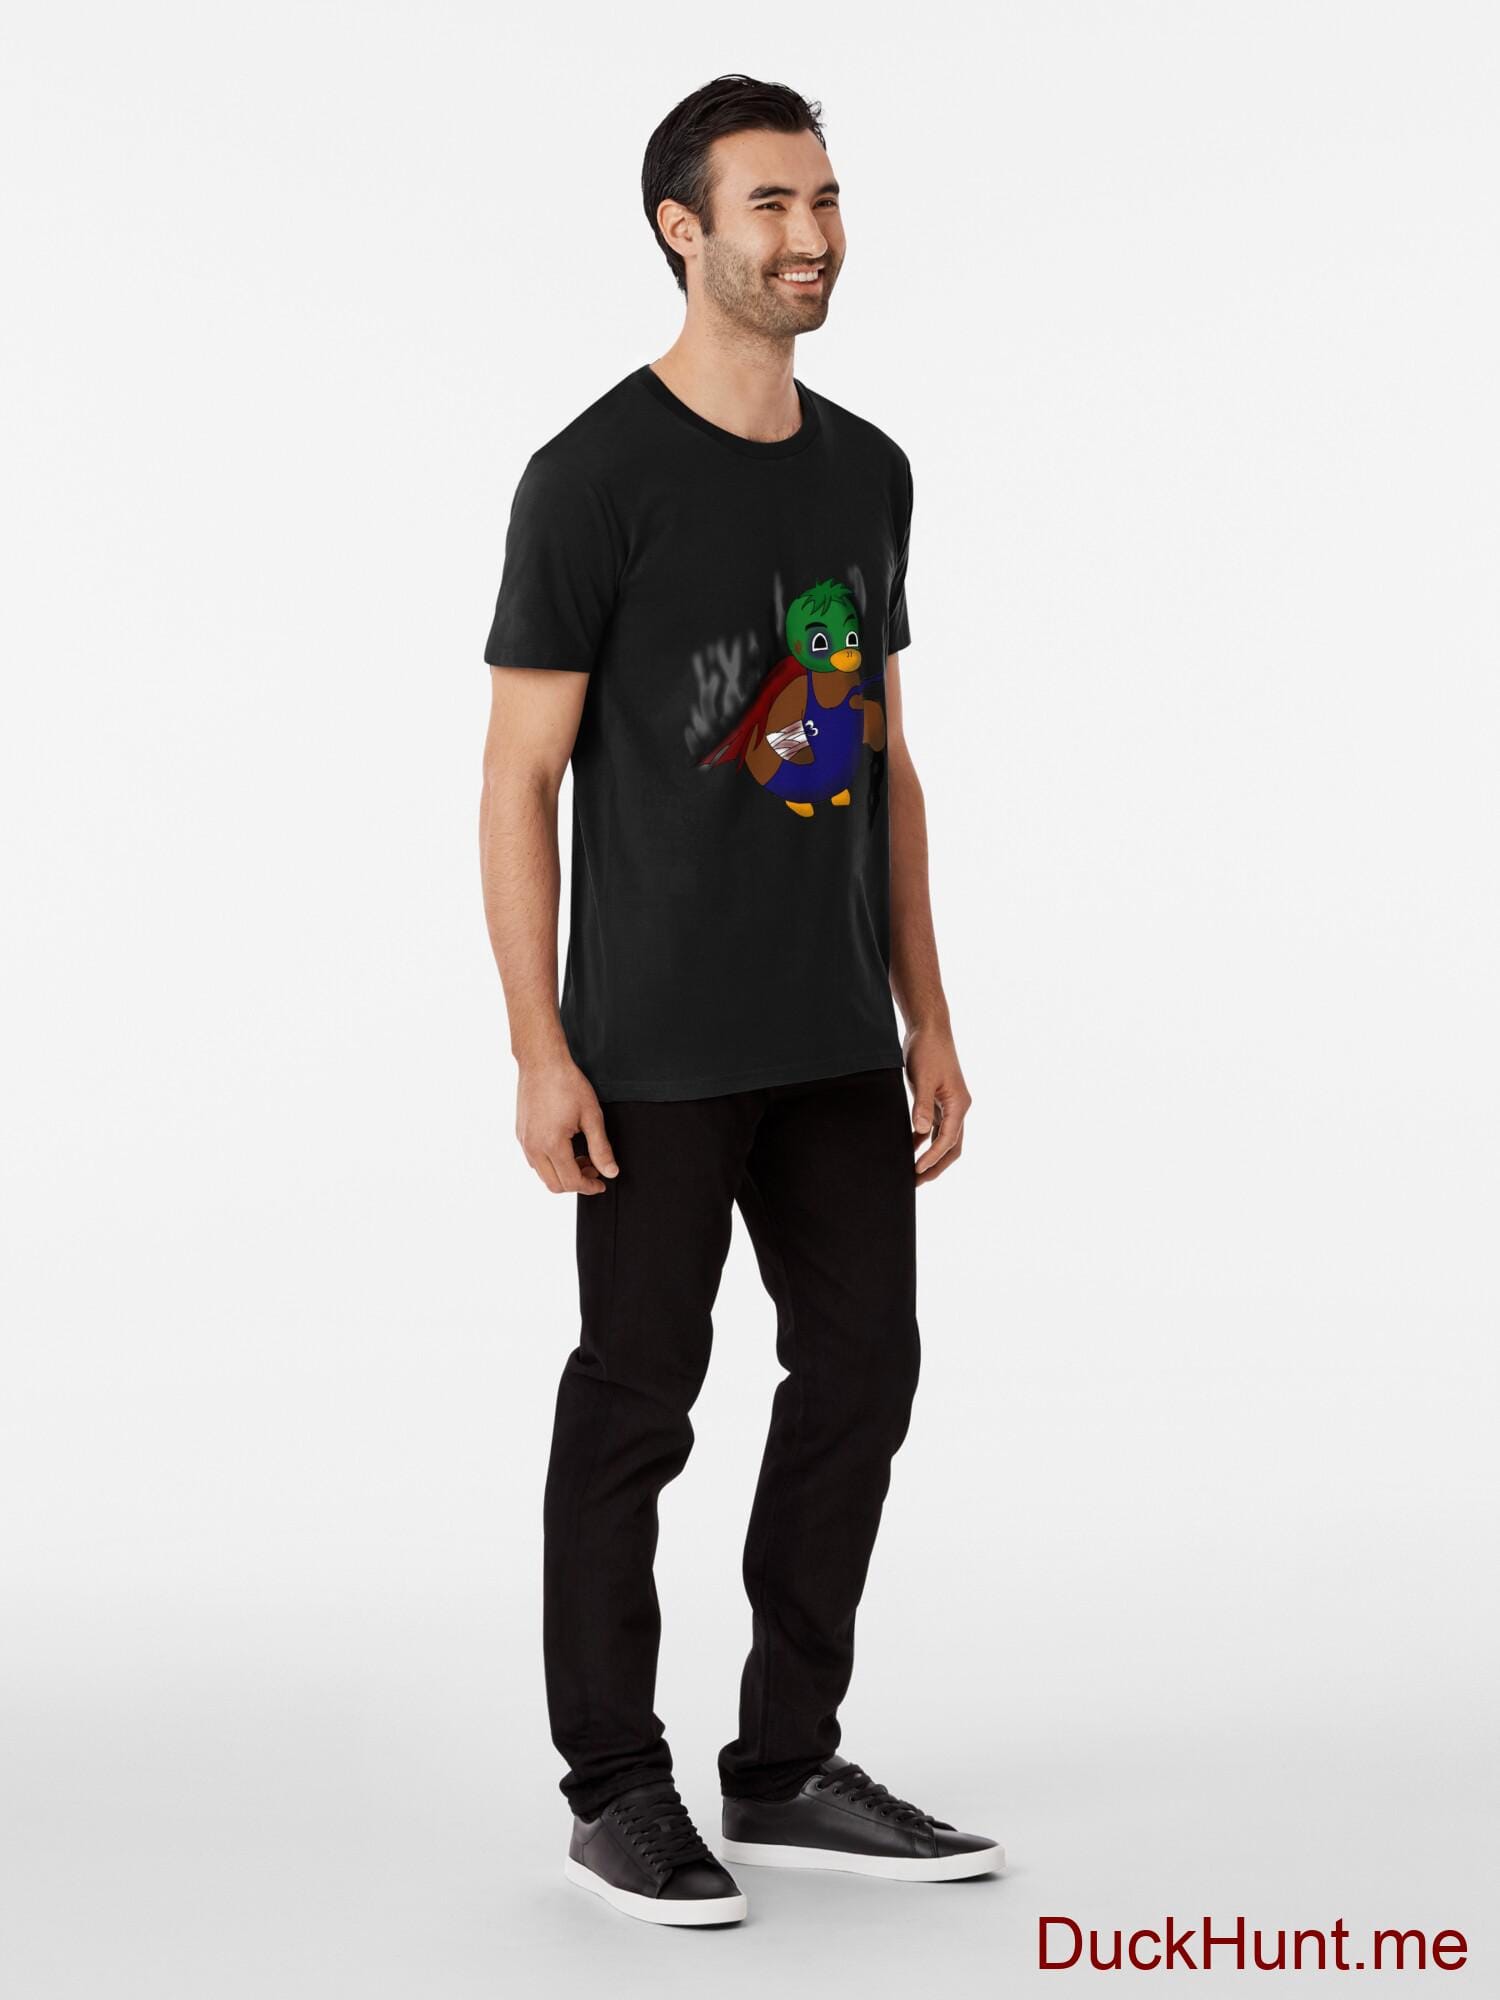 Dead Boss Duck (smoky) Black Premium T-Shirt (Front printed) alternative image 2